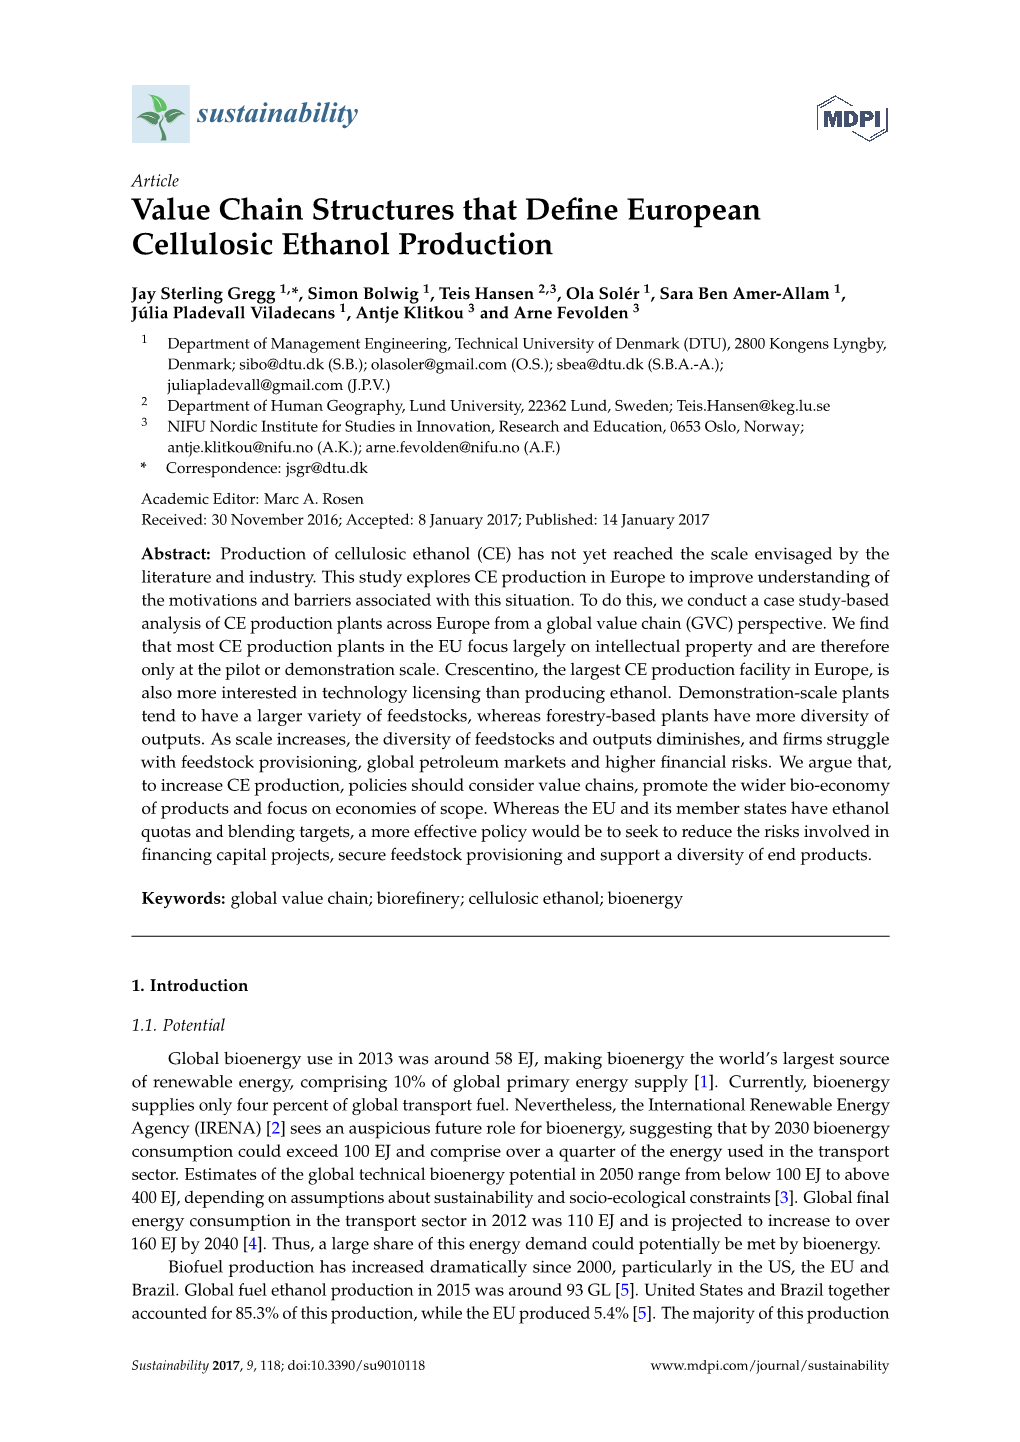 Value Chain Structures That Define European Cellulosic Ethanol